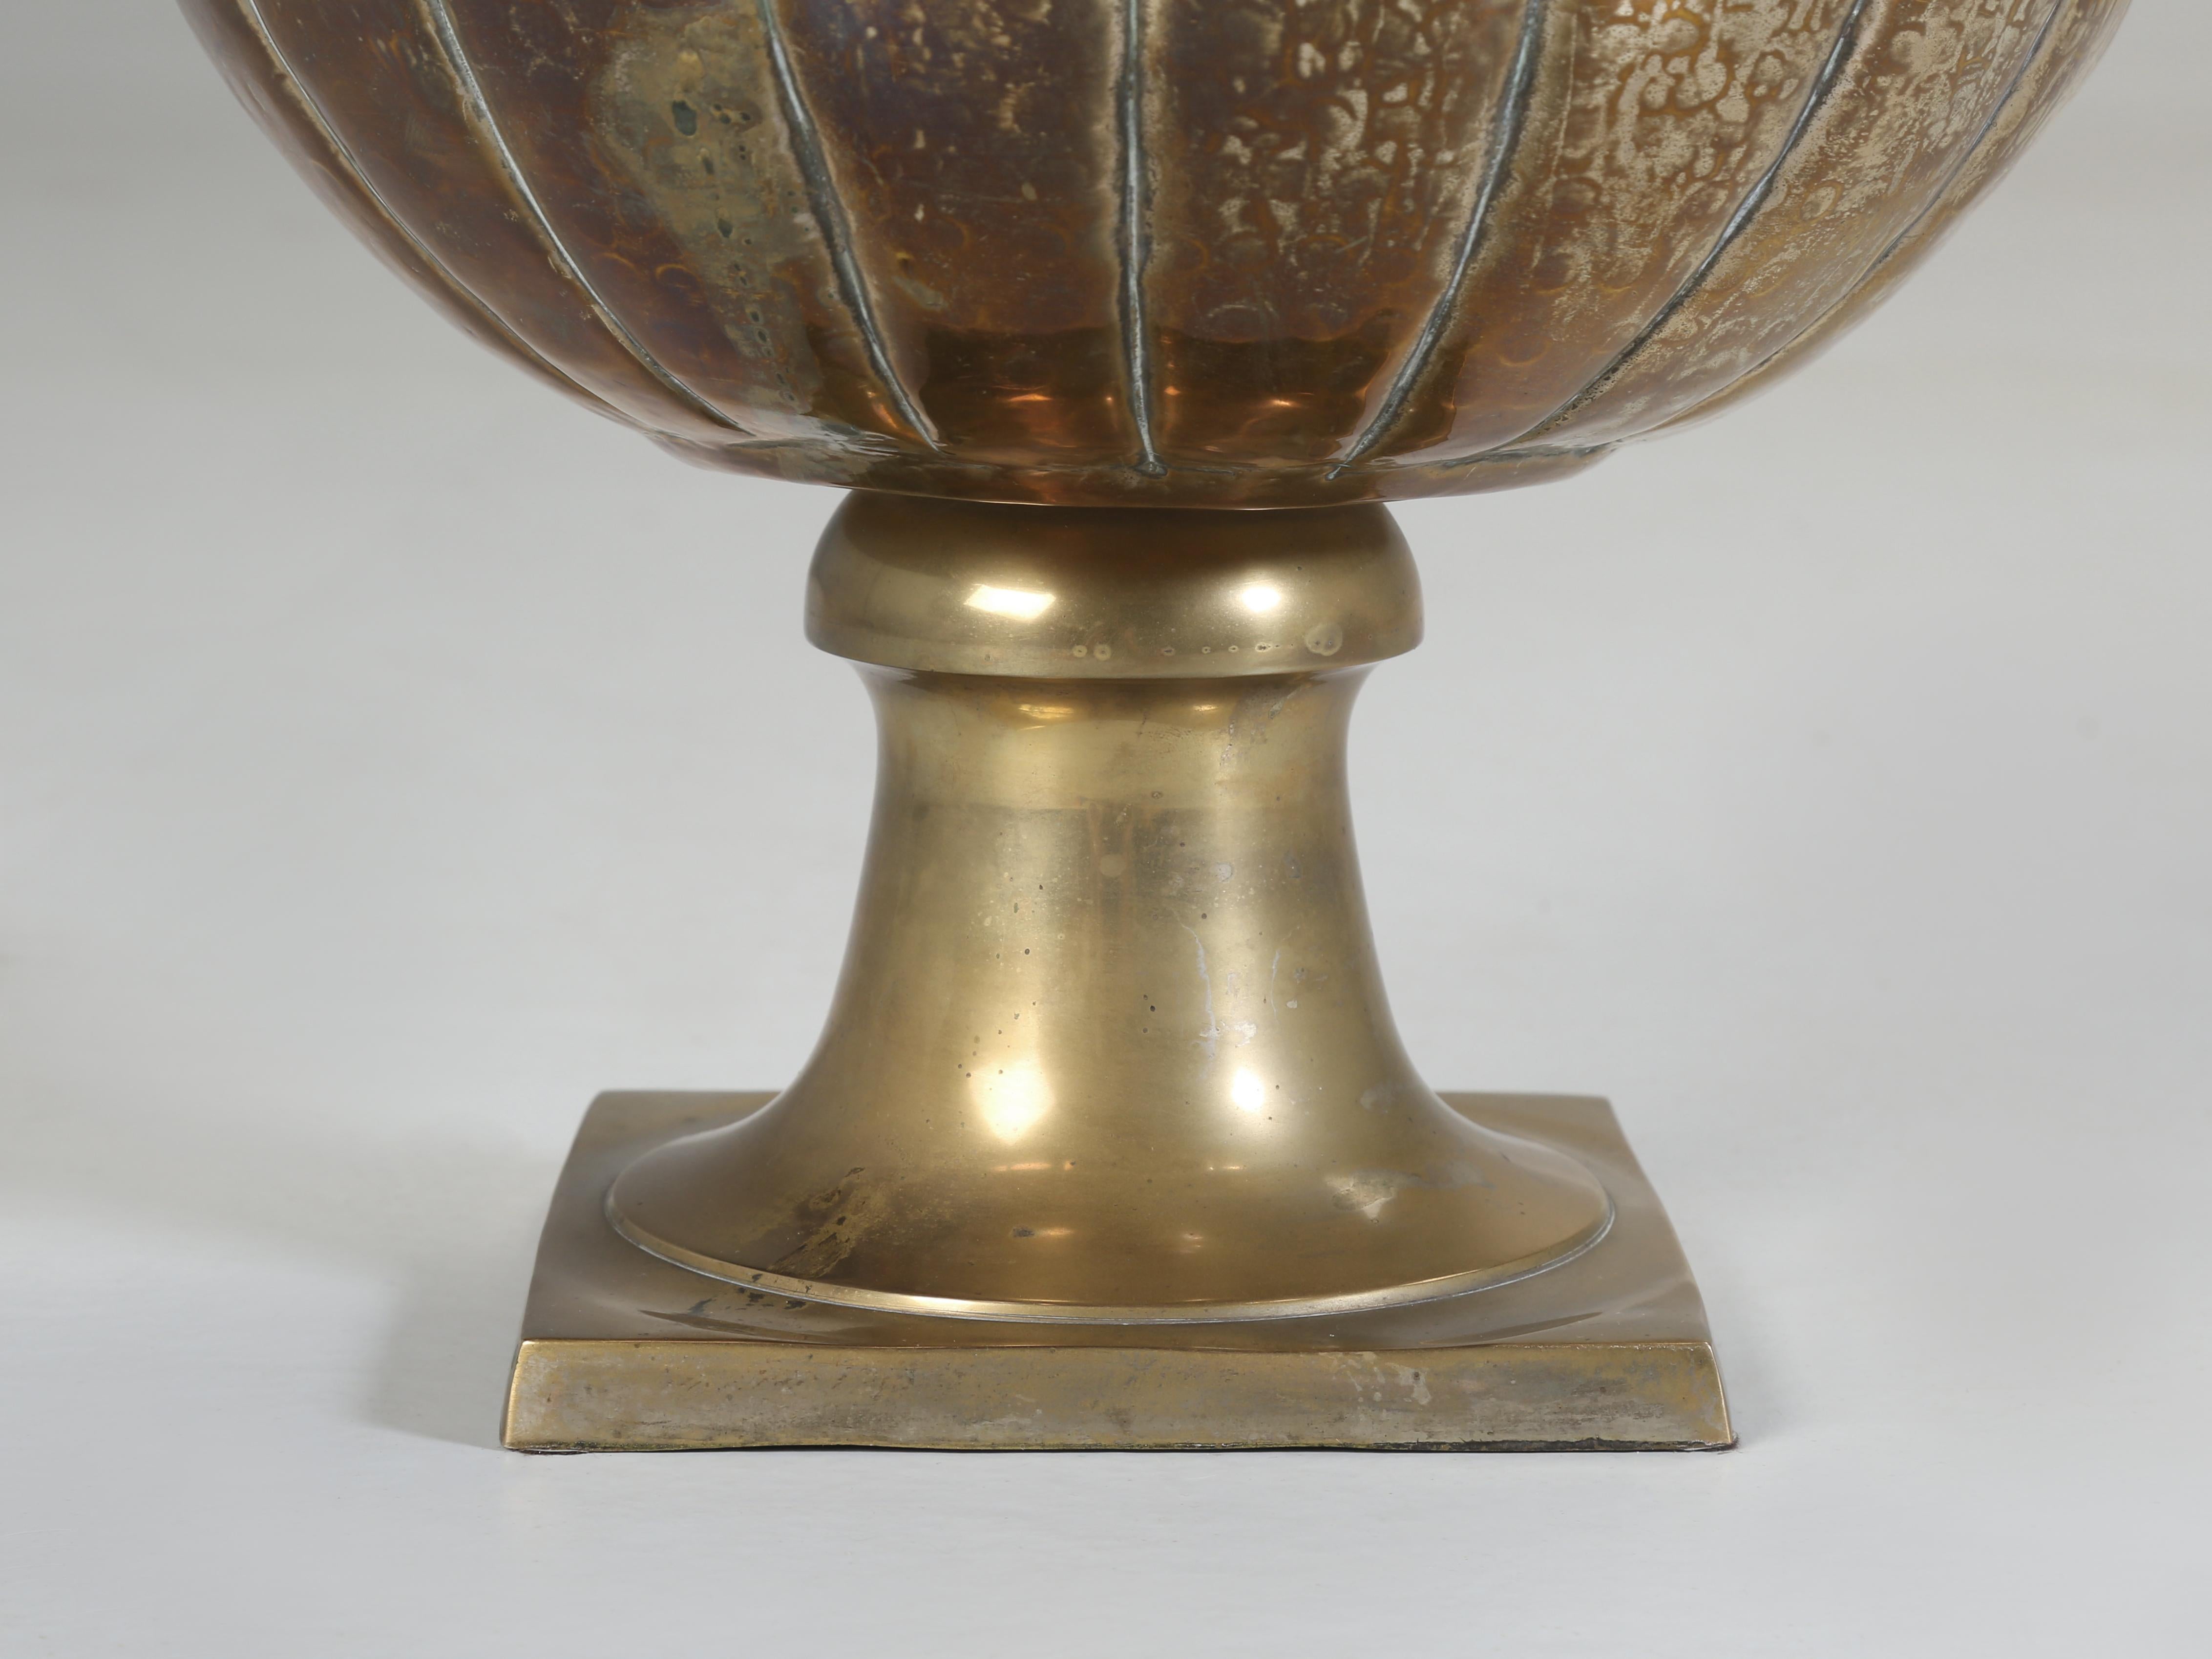 Huge Solid Brass Vase or Brass Urn Hand-Hammered Finish with Cast Brass Base  4